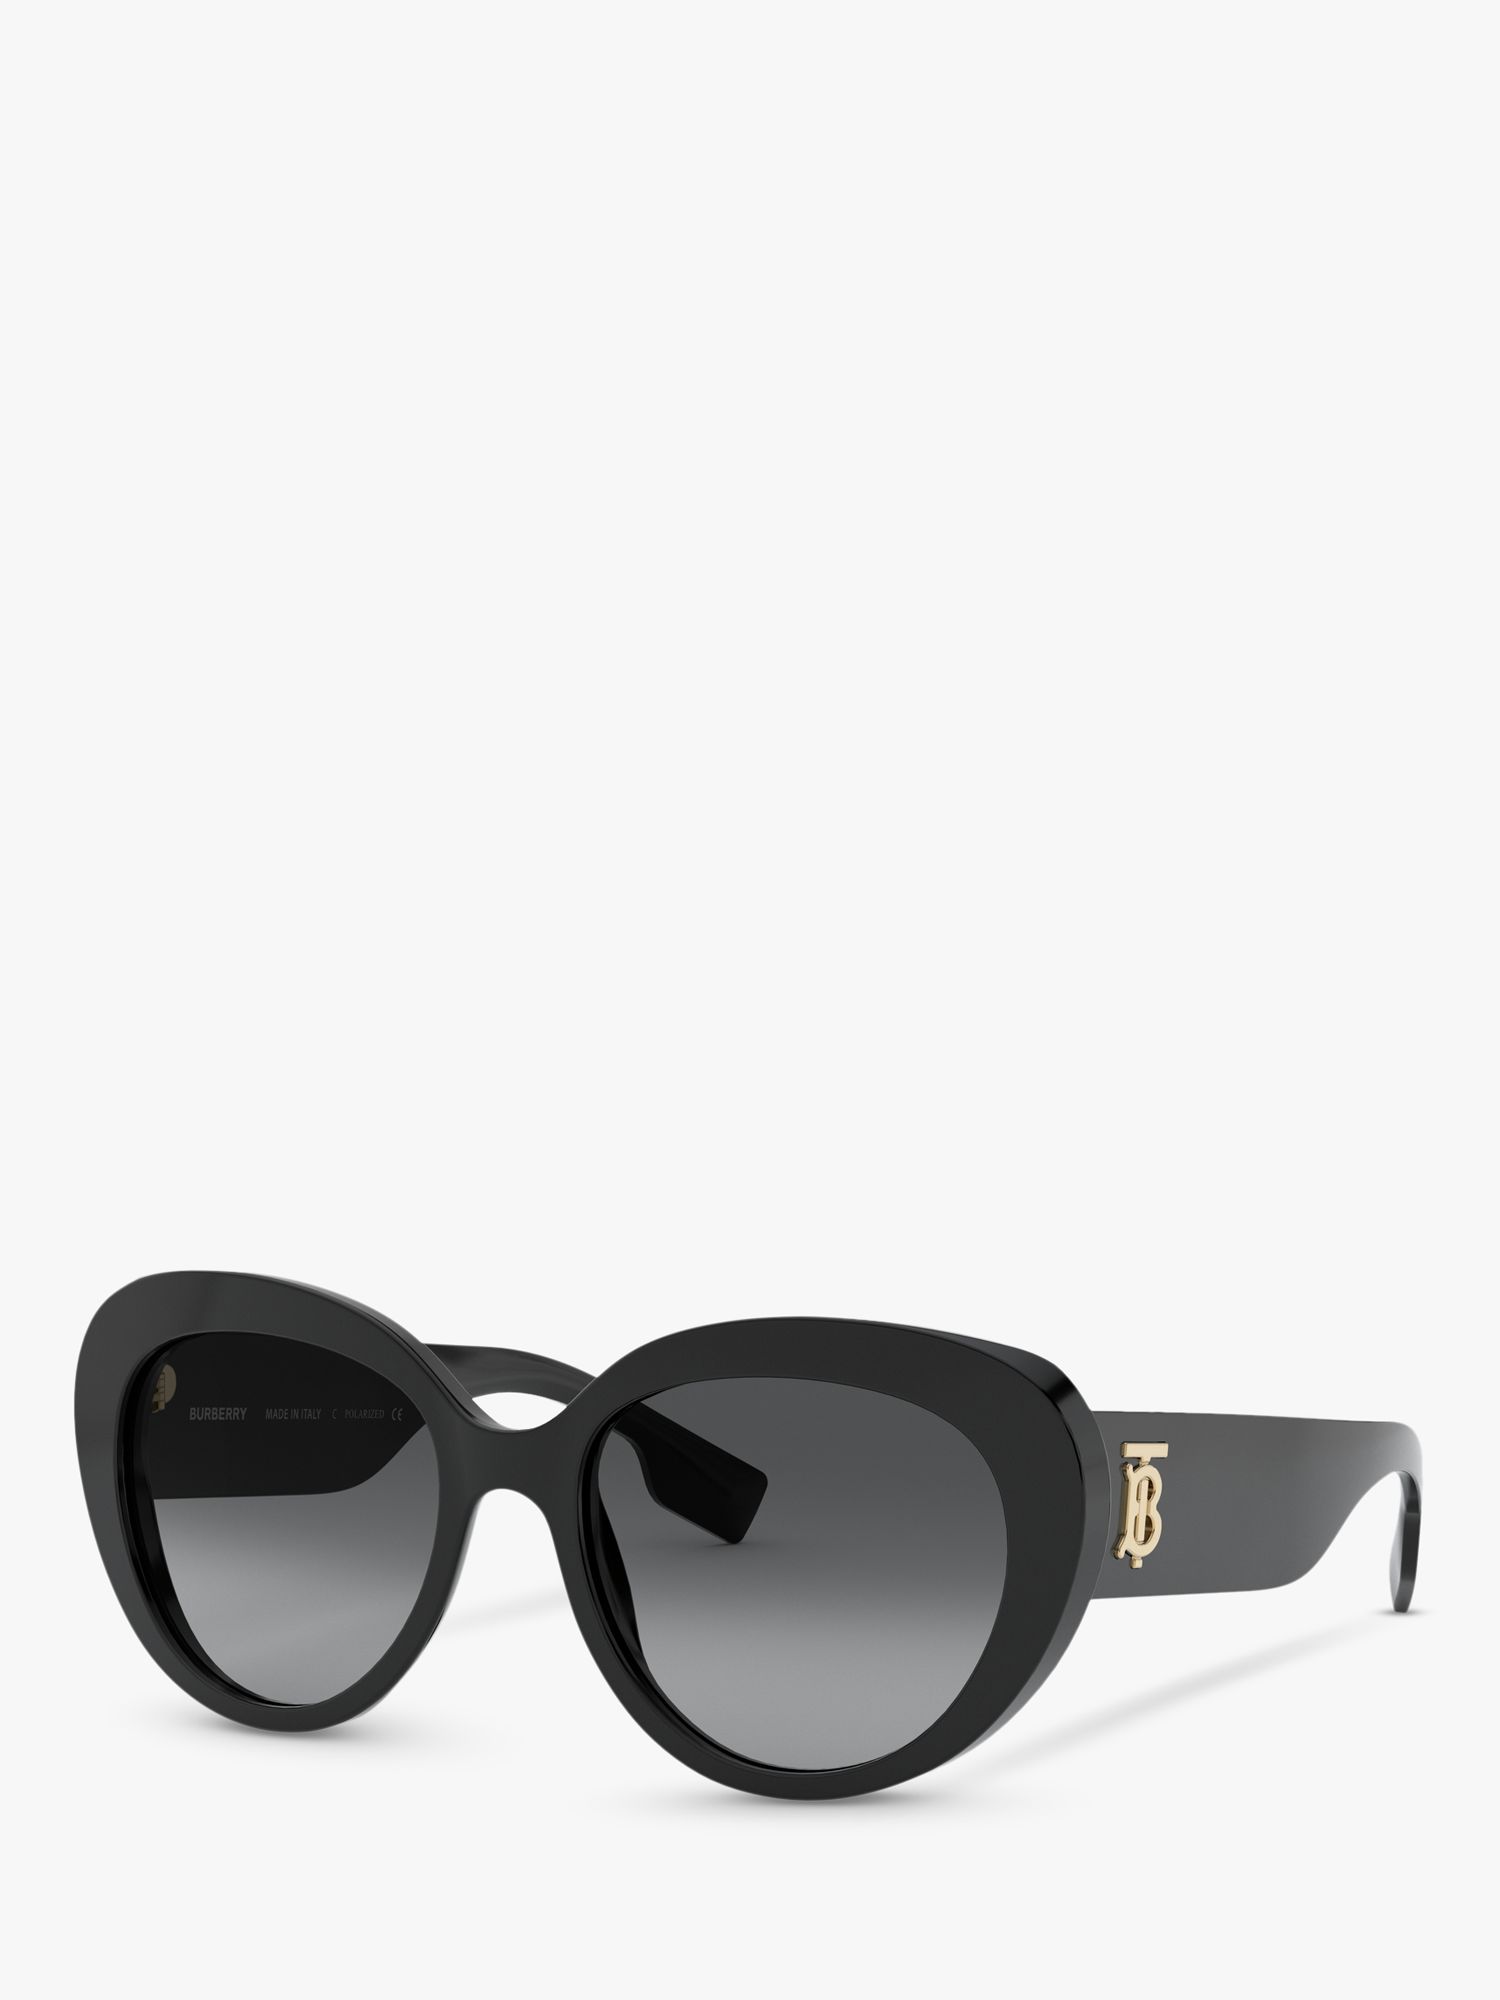 burberry sunglasses white